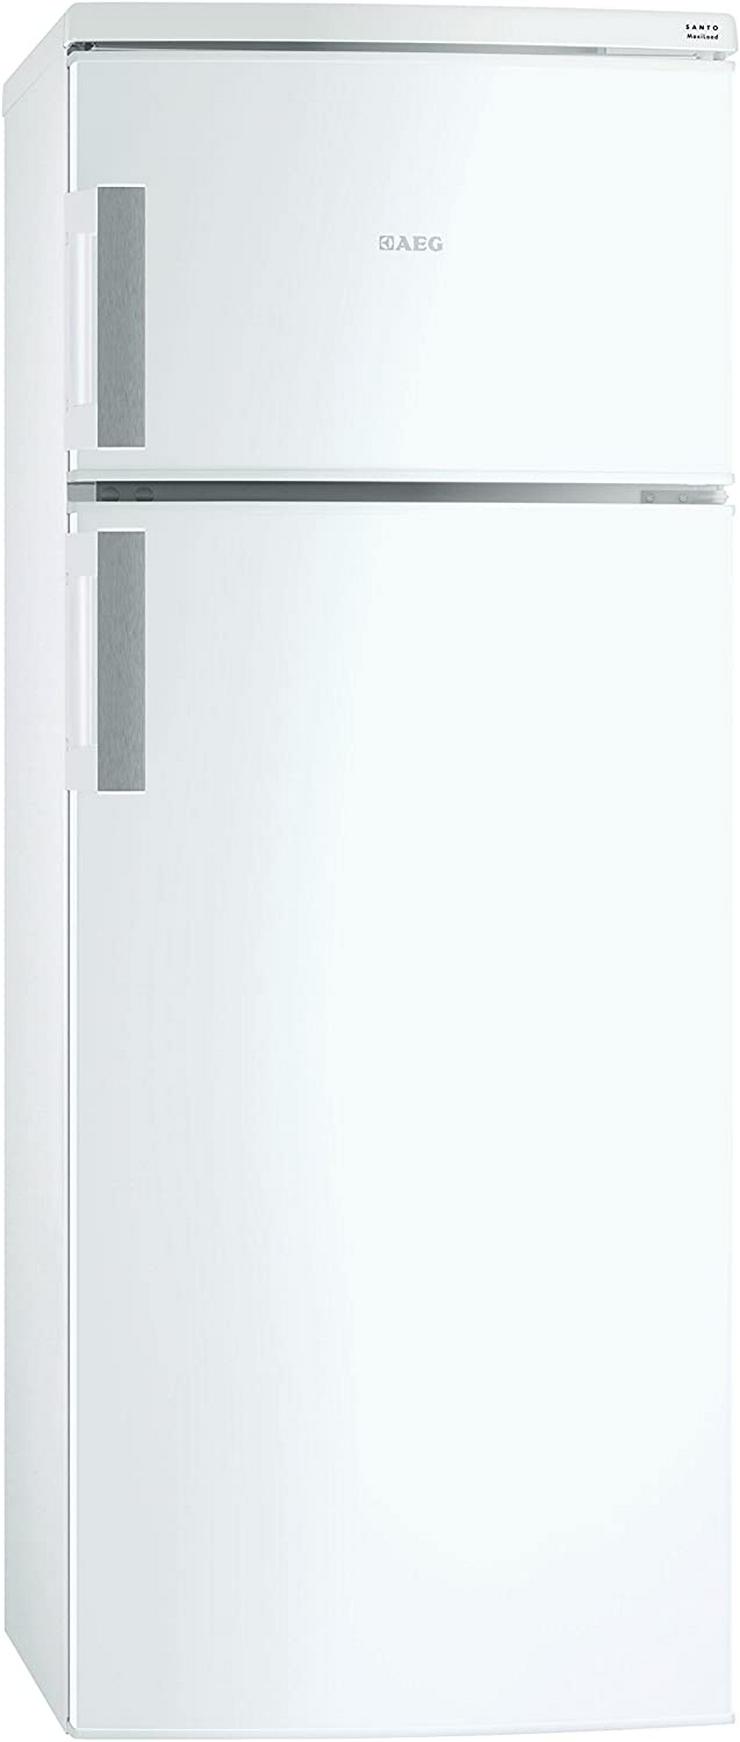 AEG Electrolux Kühl-/Gefrierkombi Santo S52300DSW1_neuwertig - Kühlschränke - Bild 3